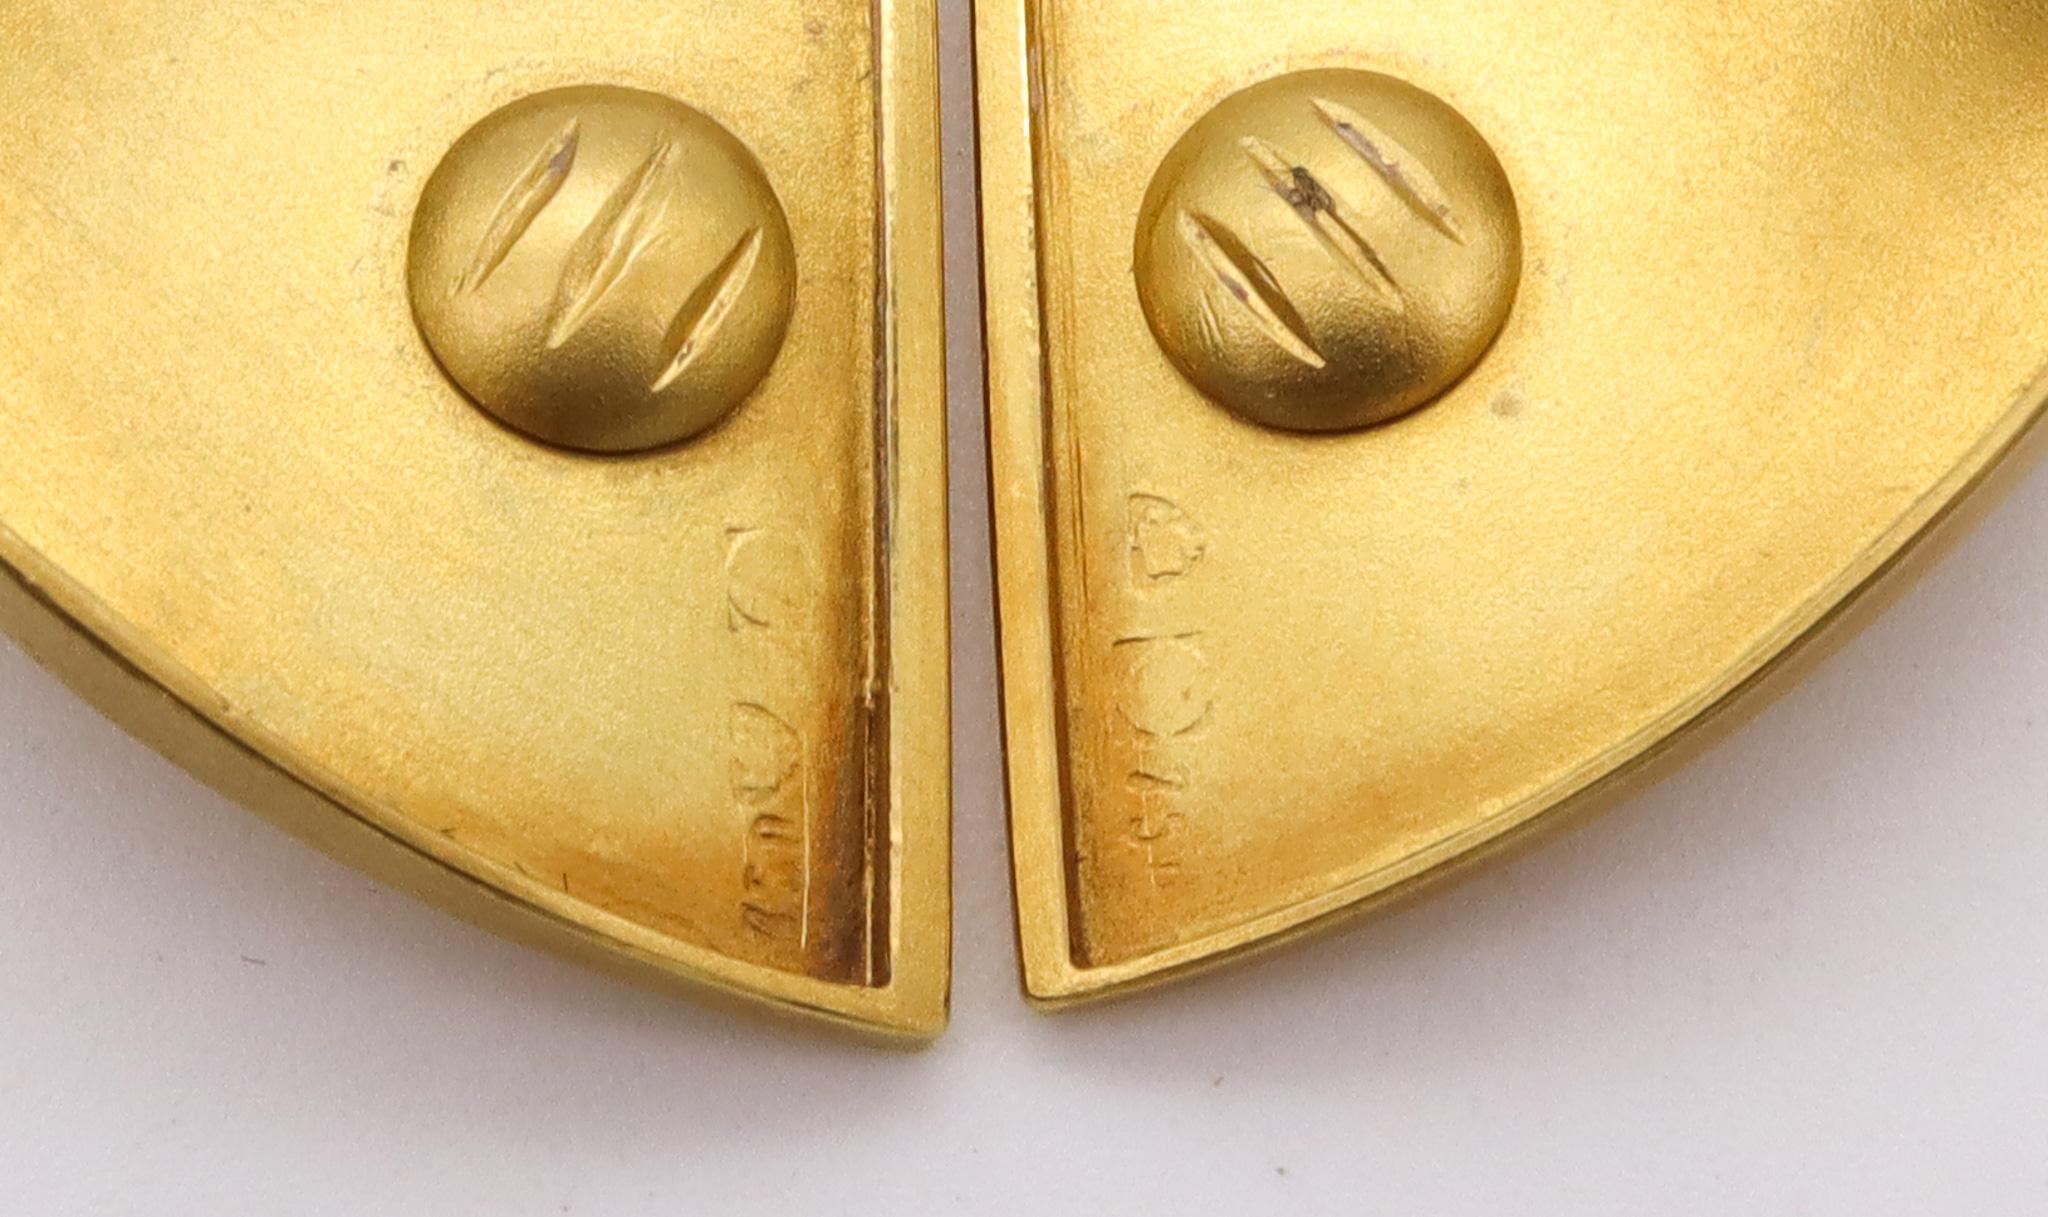 Modernist German Designer Bauhaus Geometric Triangular Clips on Earrings in 18kt Gold For Sale